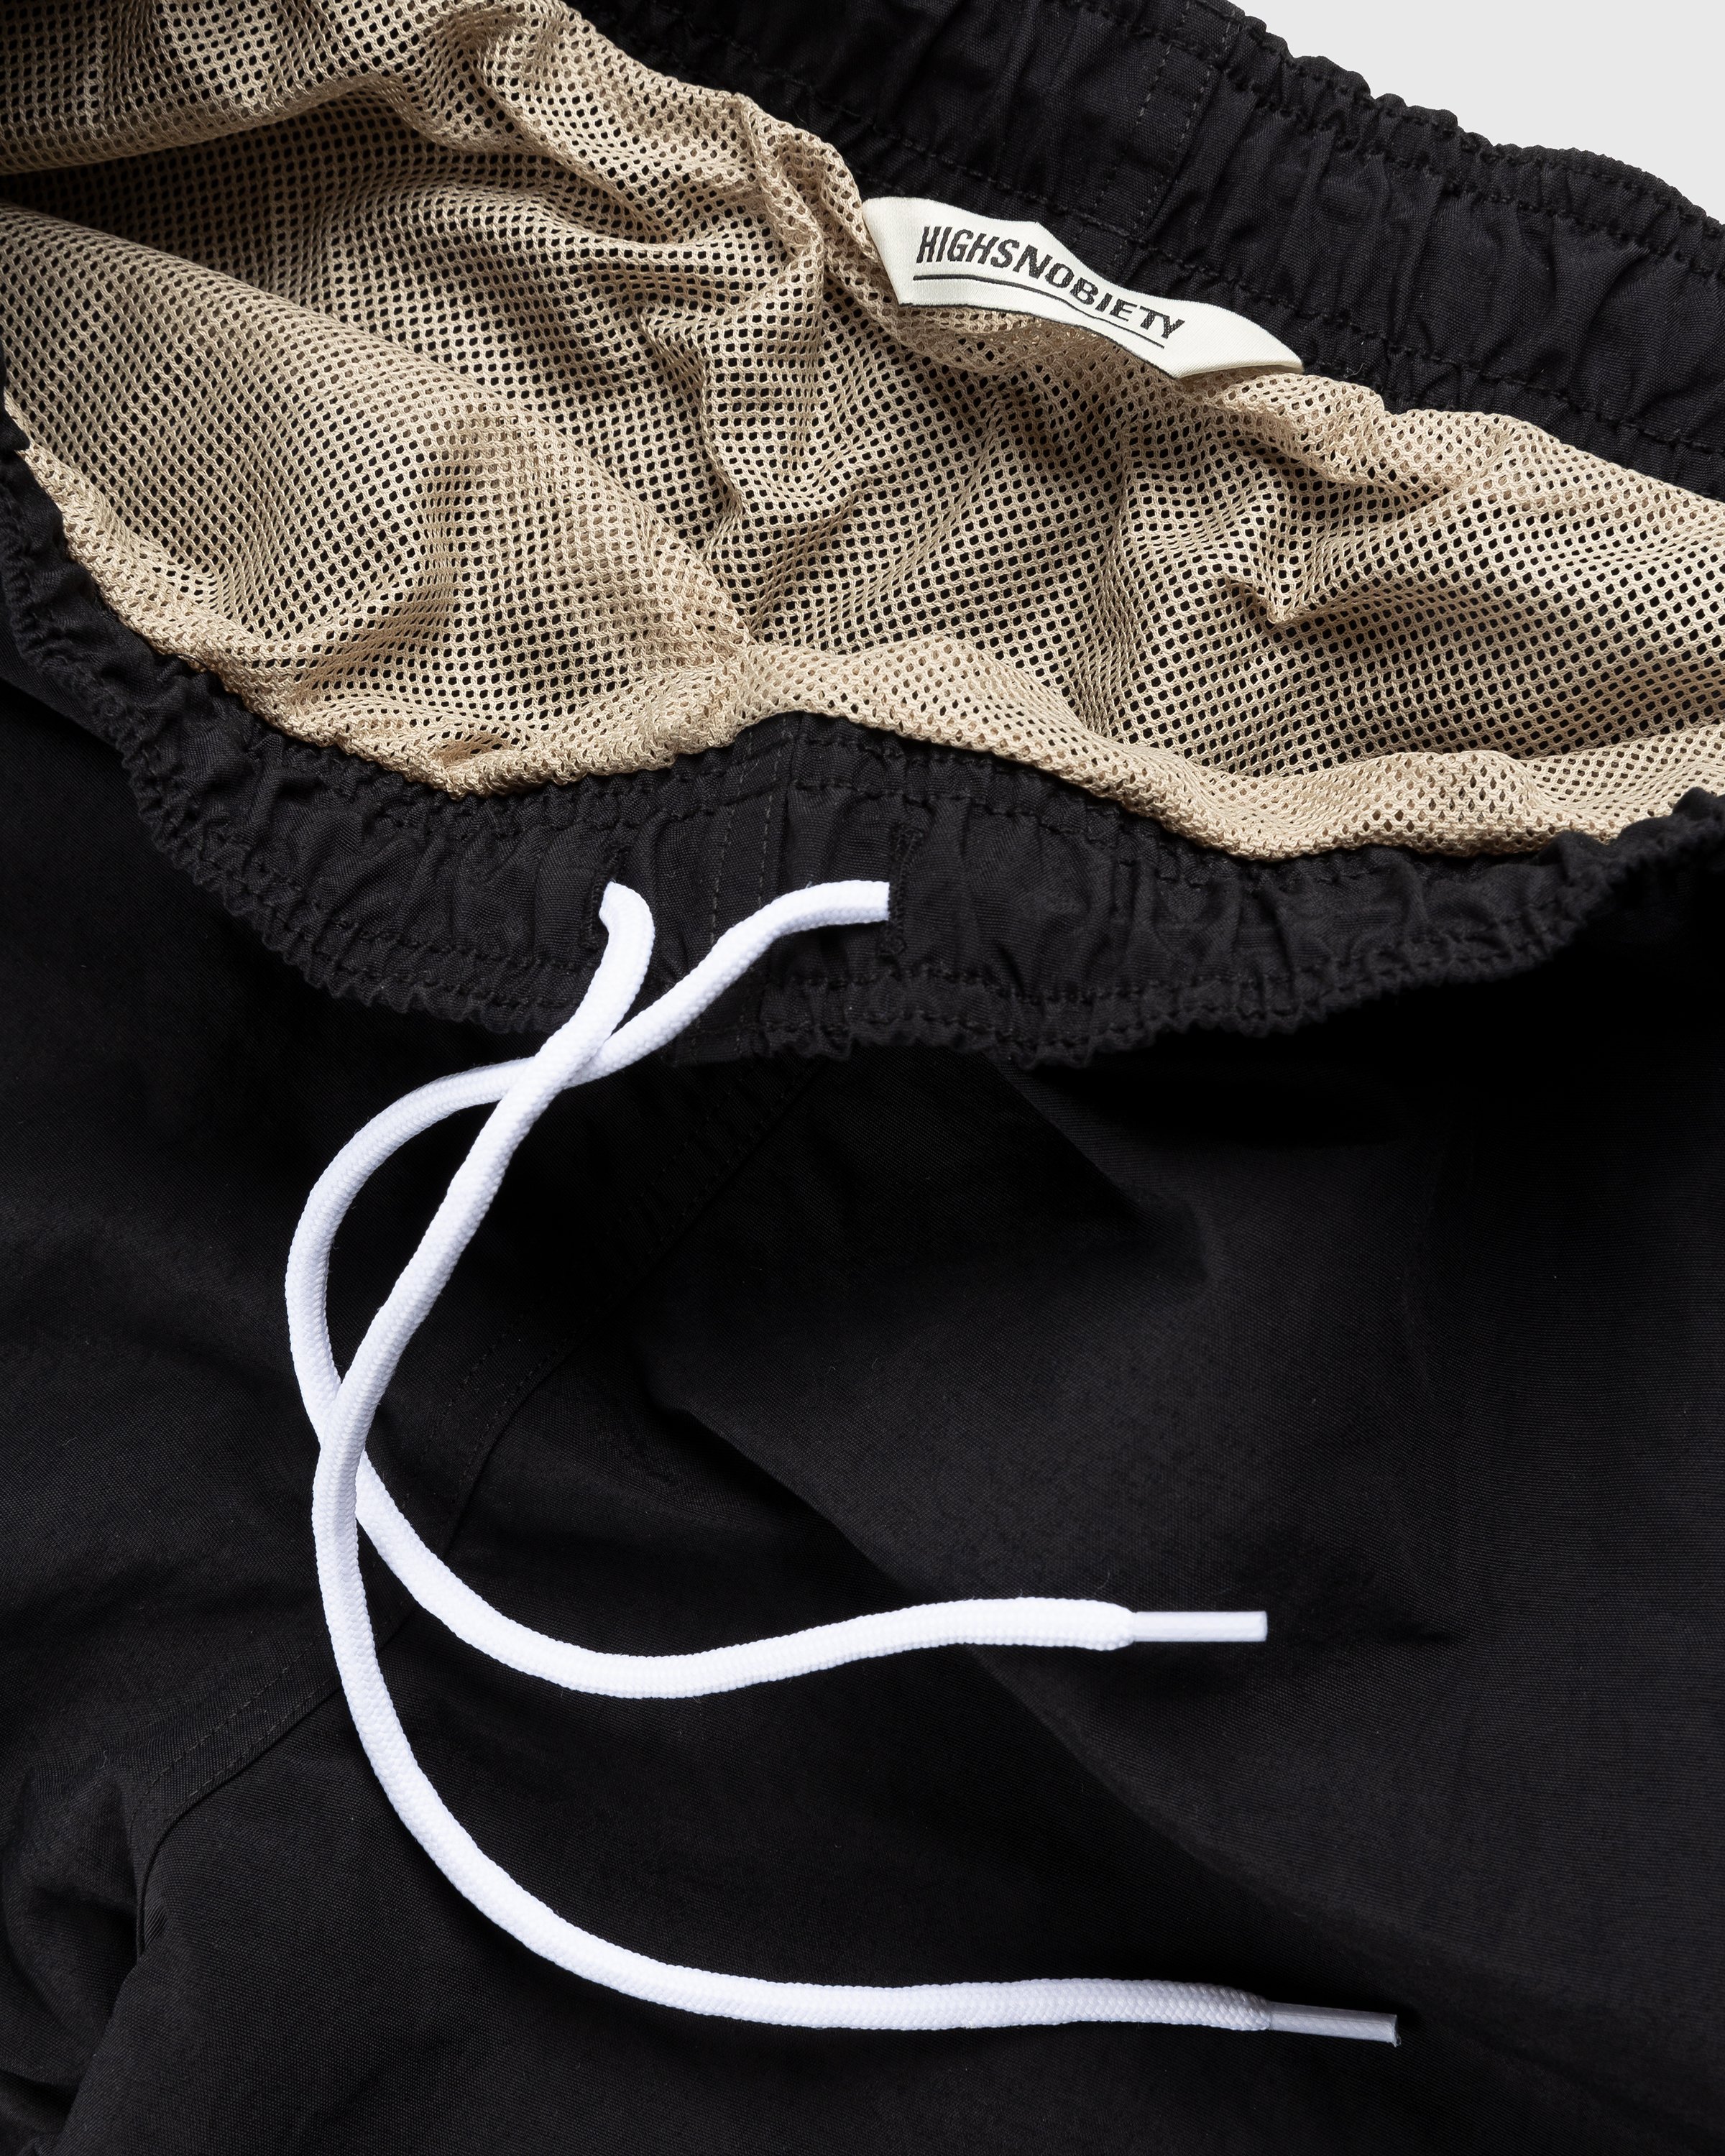 RUF x Highsnobiety - Water Shorts Black - Clothing - Black - Image 6